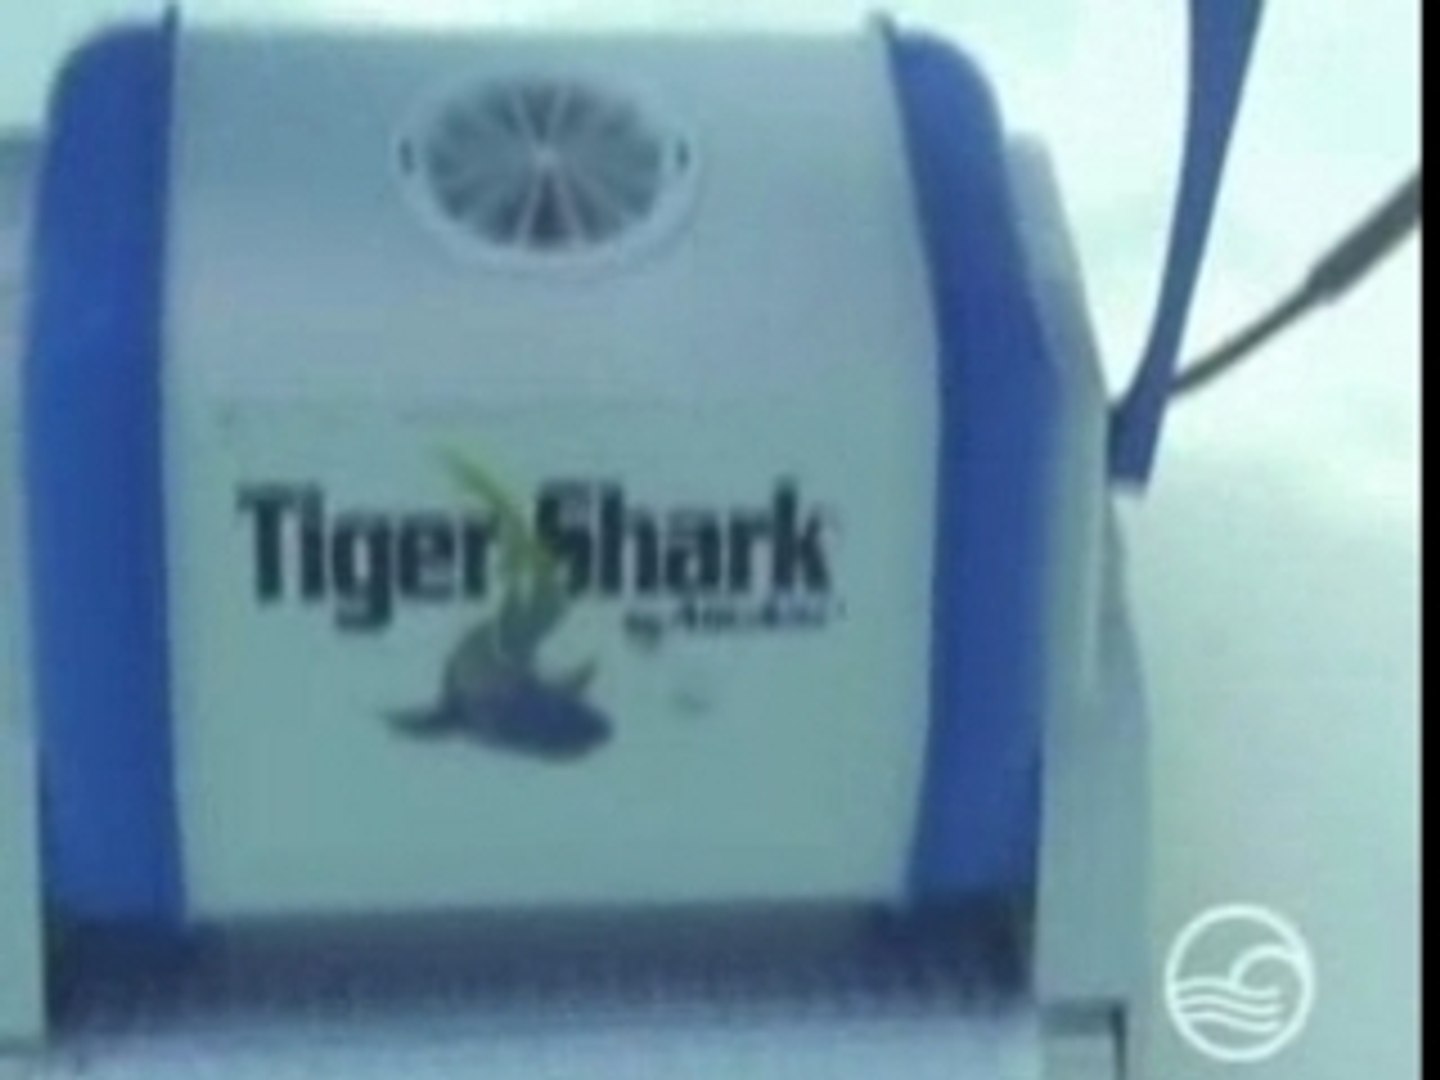 Robot piscine Pontoon : Tiger Shark - Vidéo Dailymotion